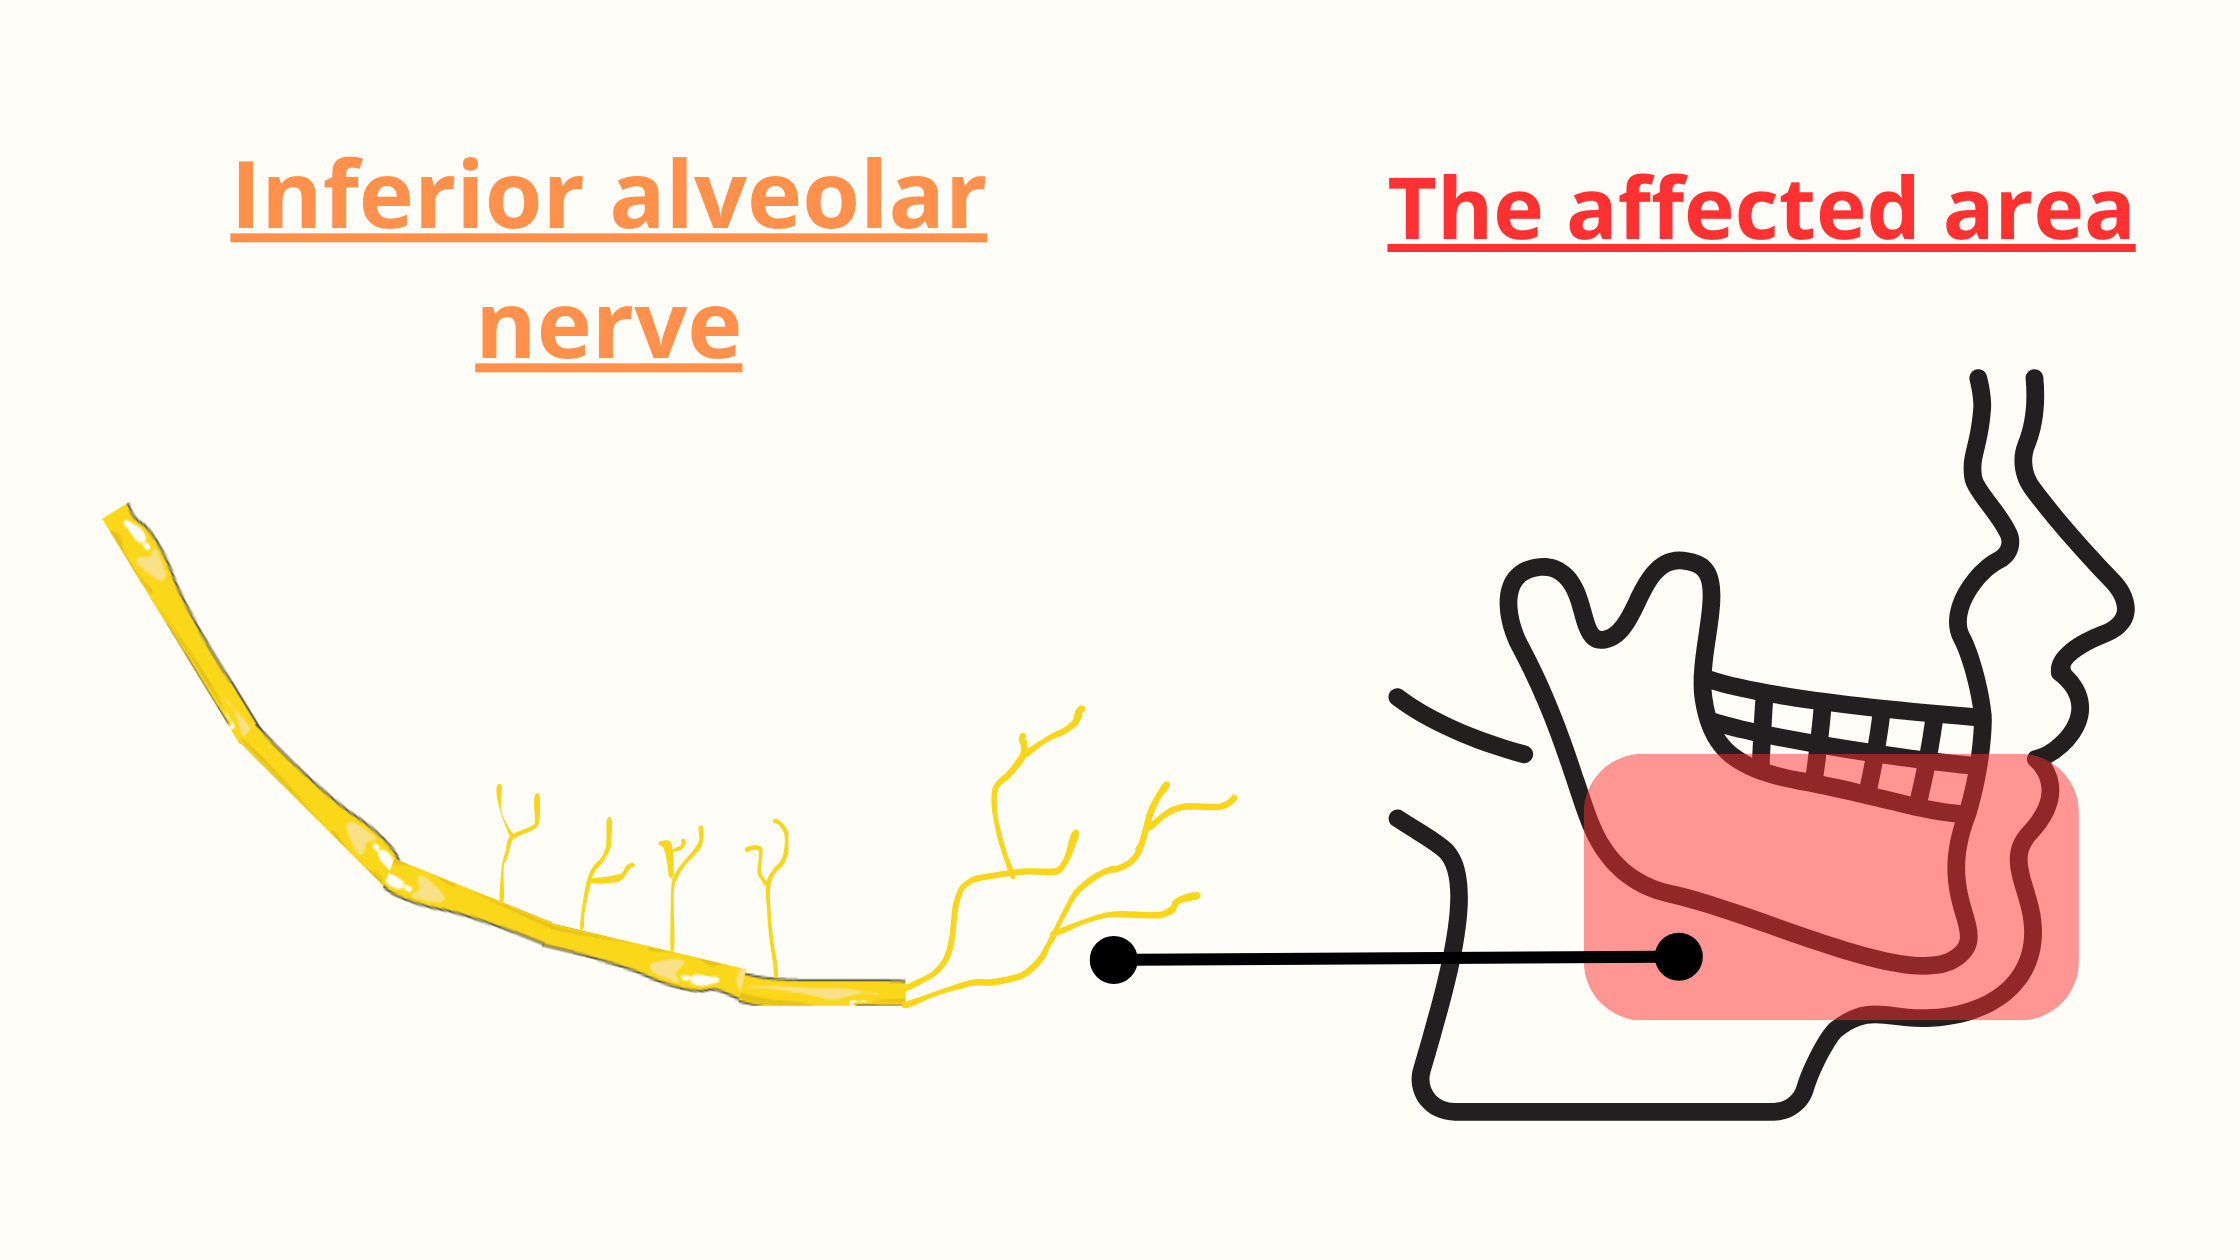 Inferior alveolar nerve damage effects